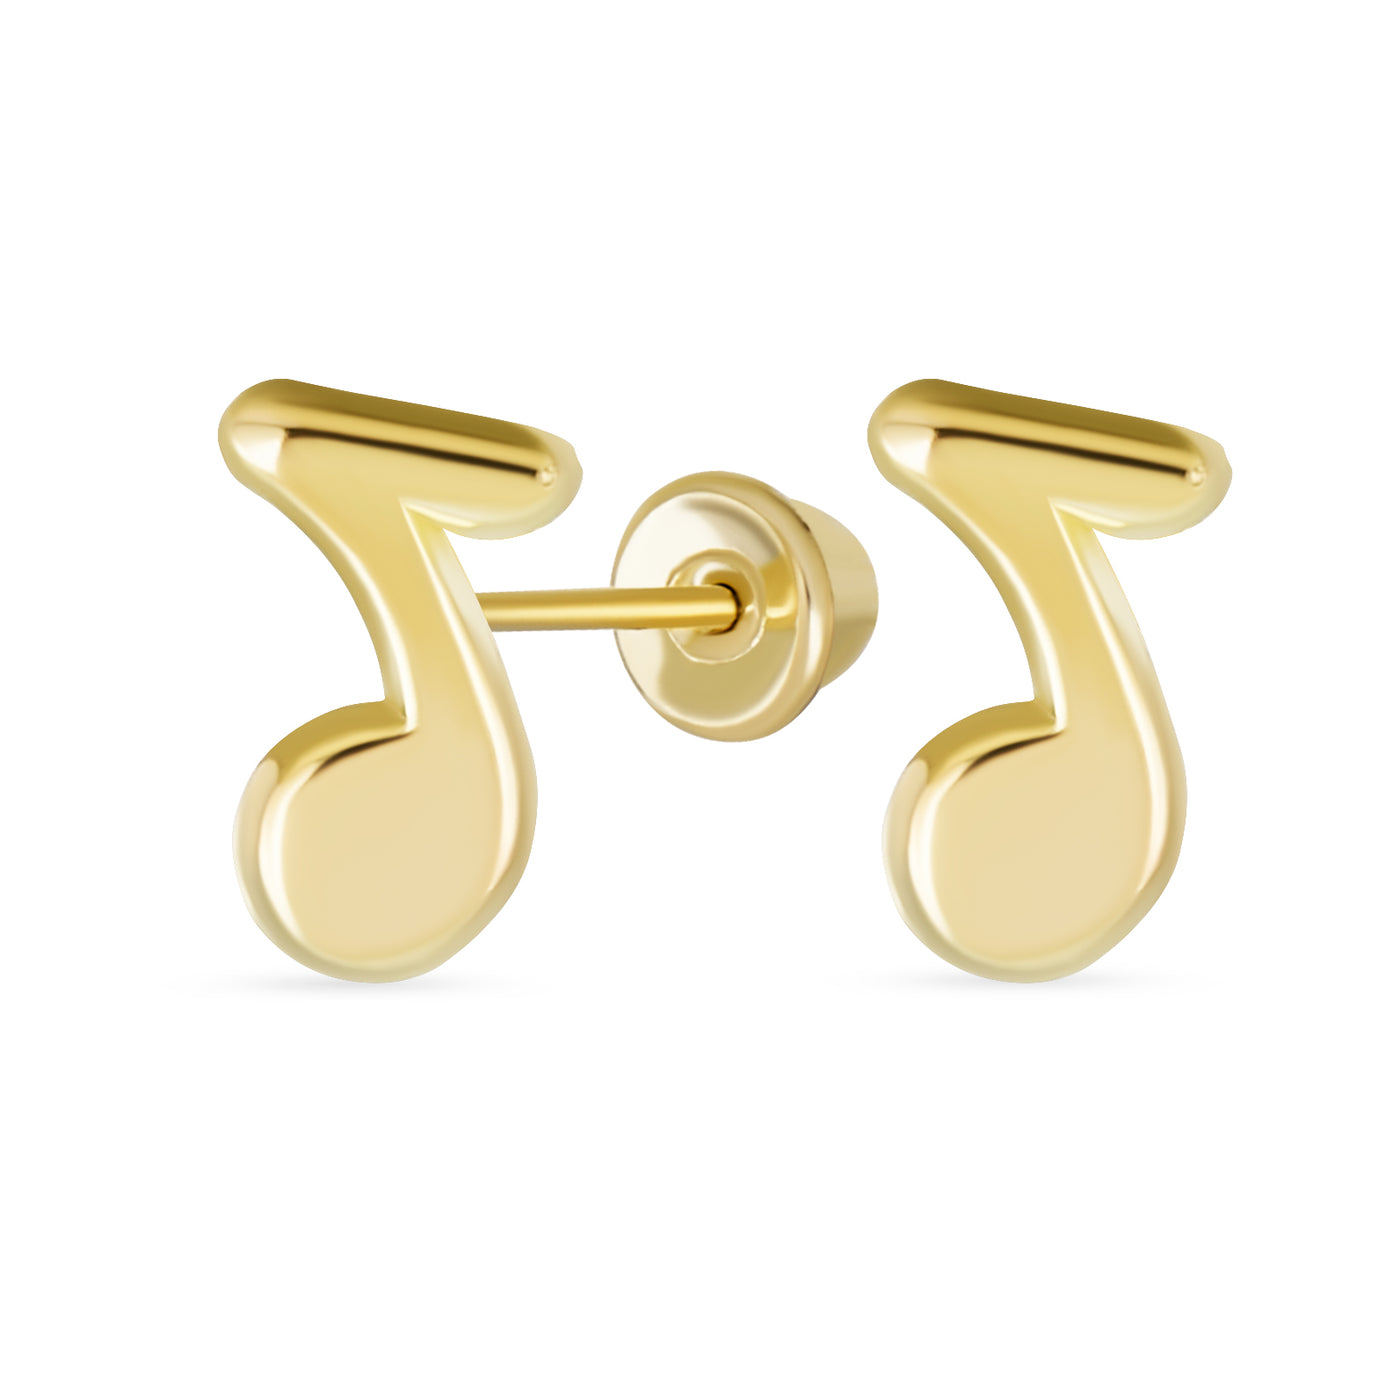 Tiny Teacher Music Notes Stud Earrings Musician Student Real 14K Gold